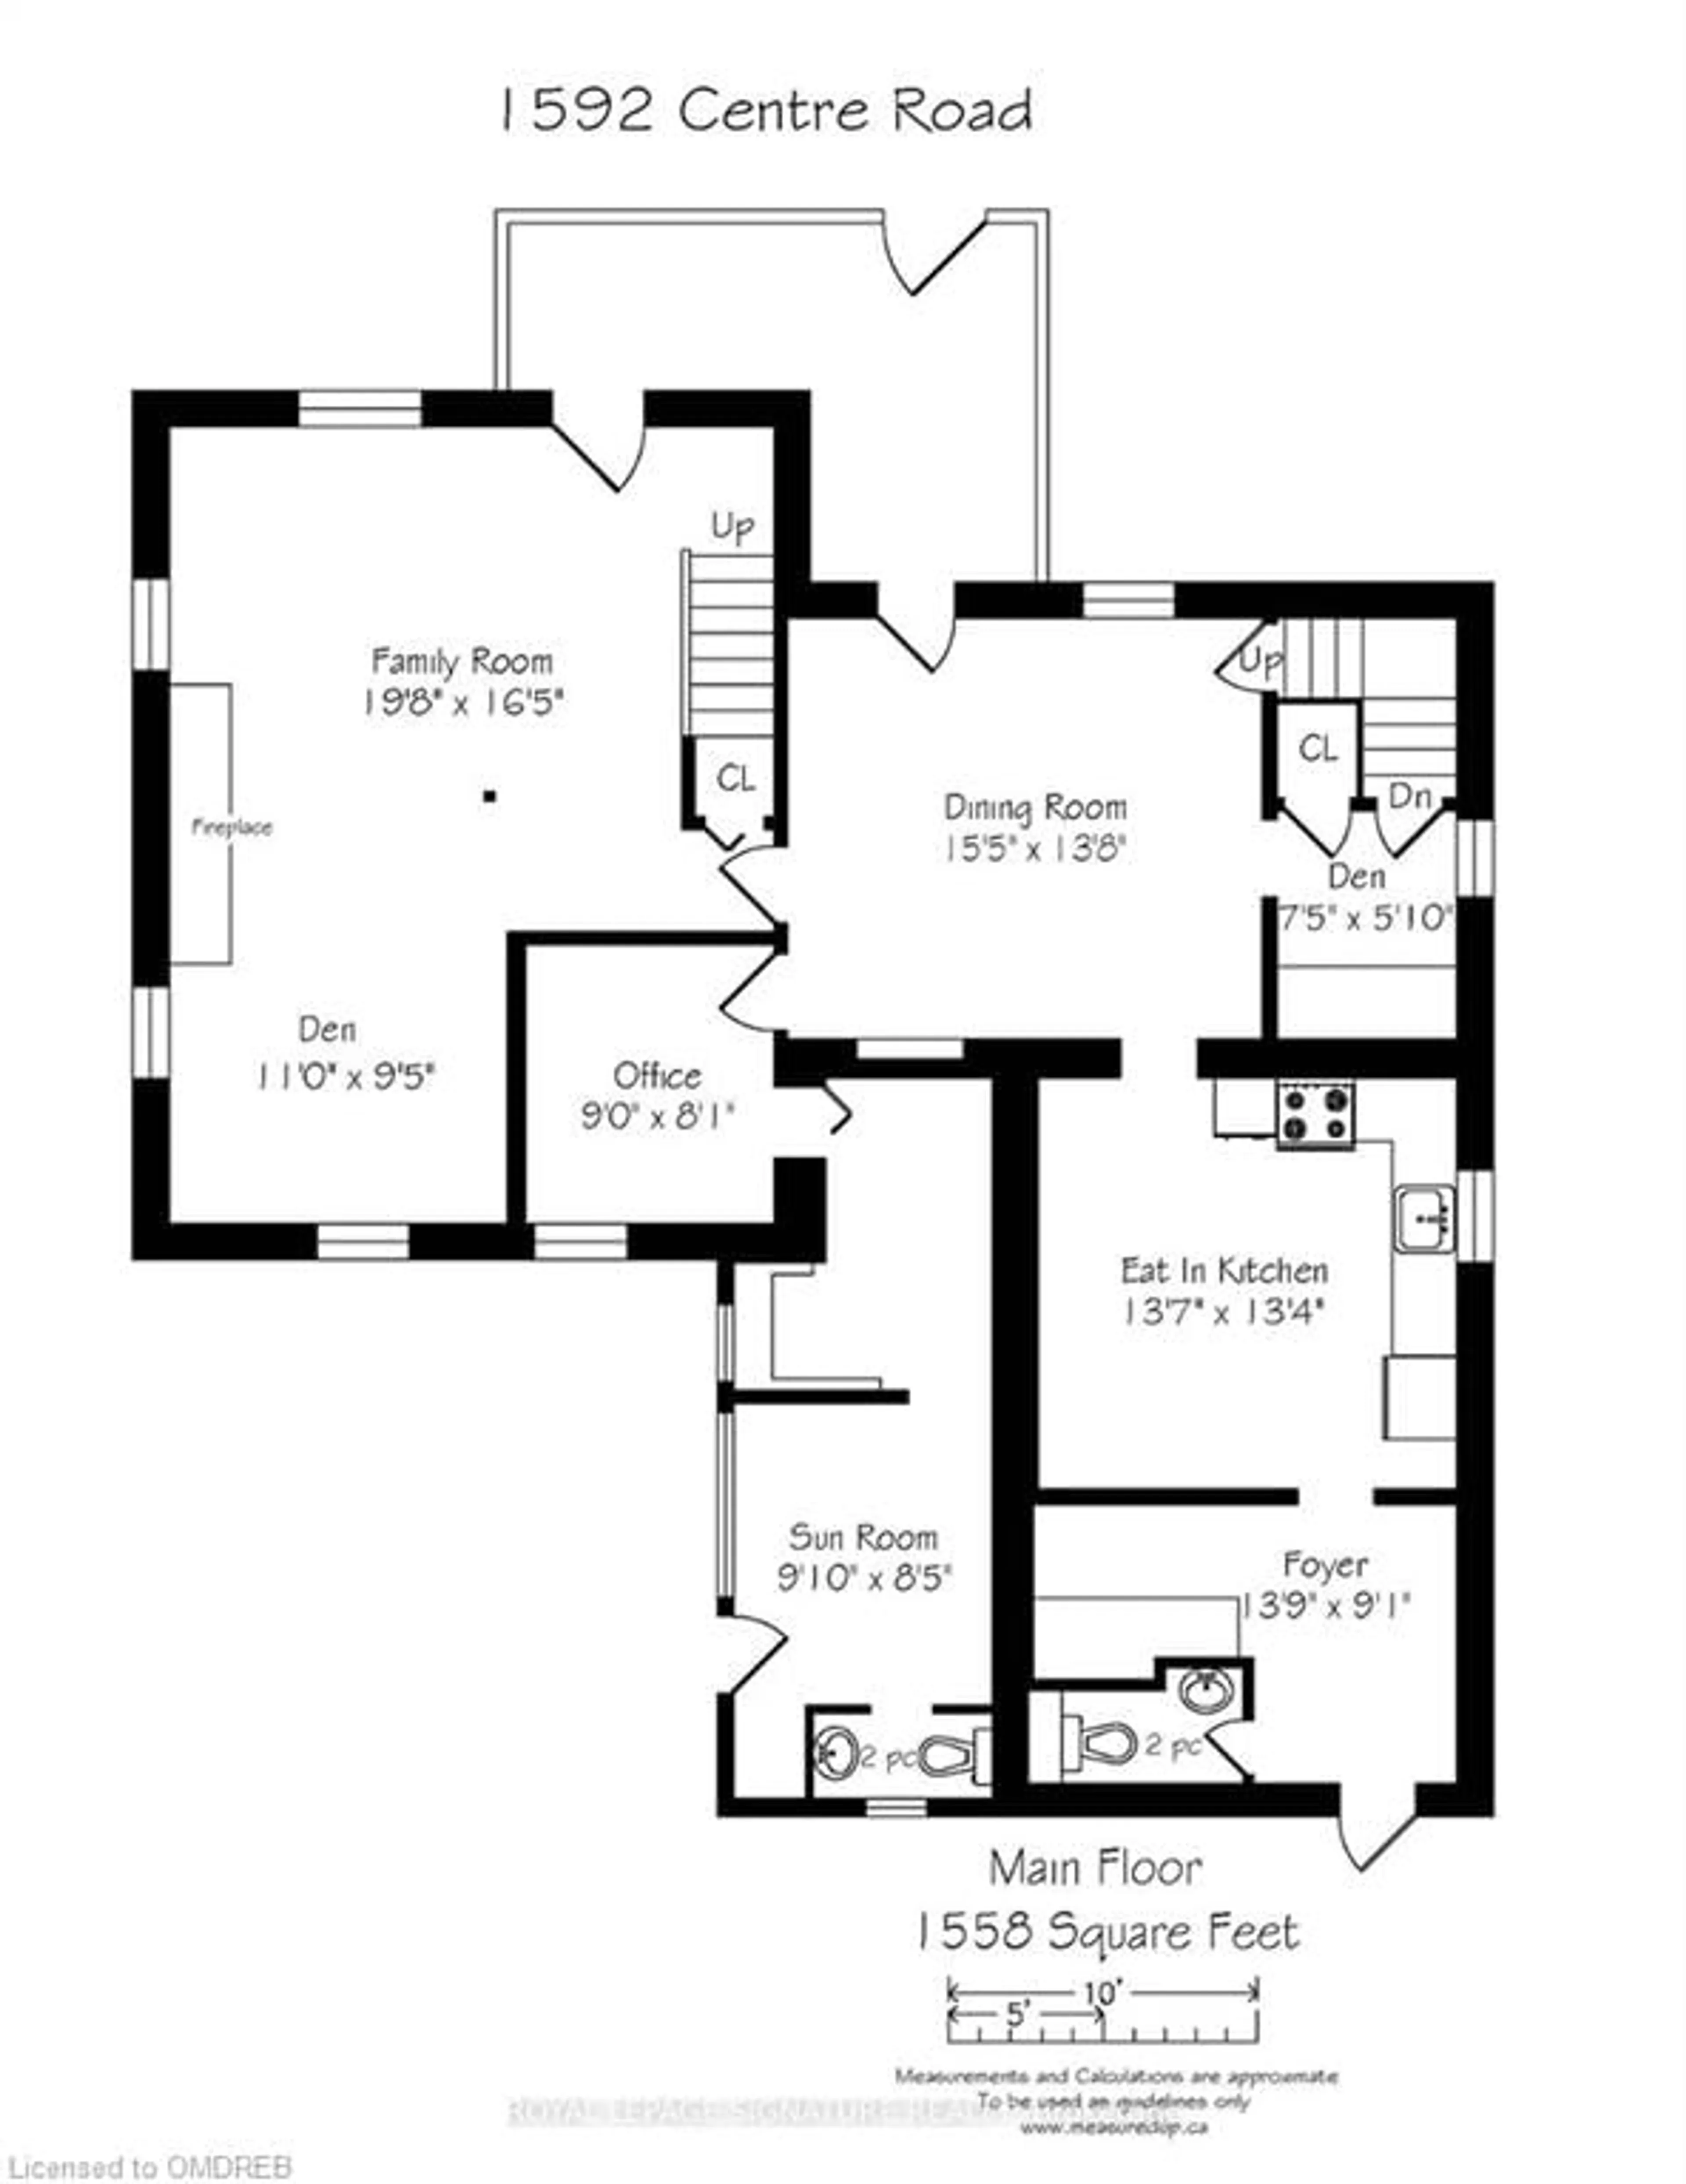 Floor plan for 1592 Centre Rd, Carlisle Ontario L8N 2Z7